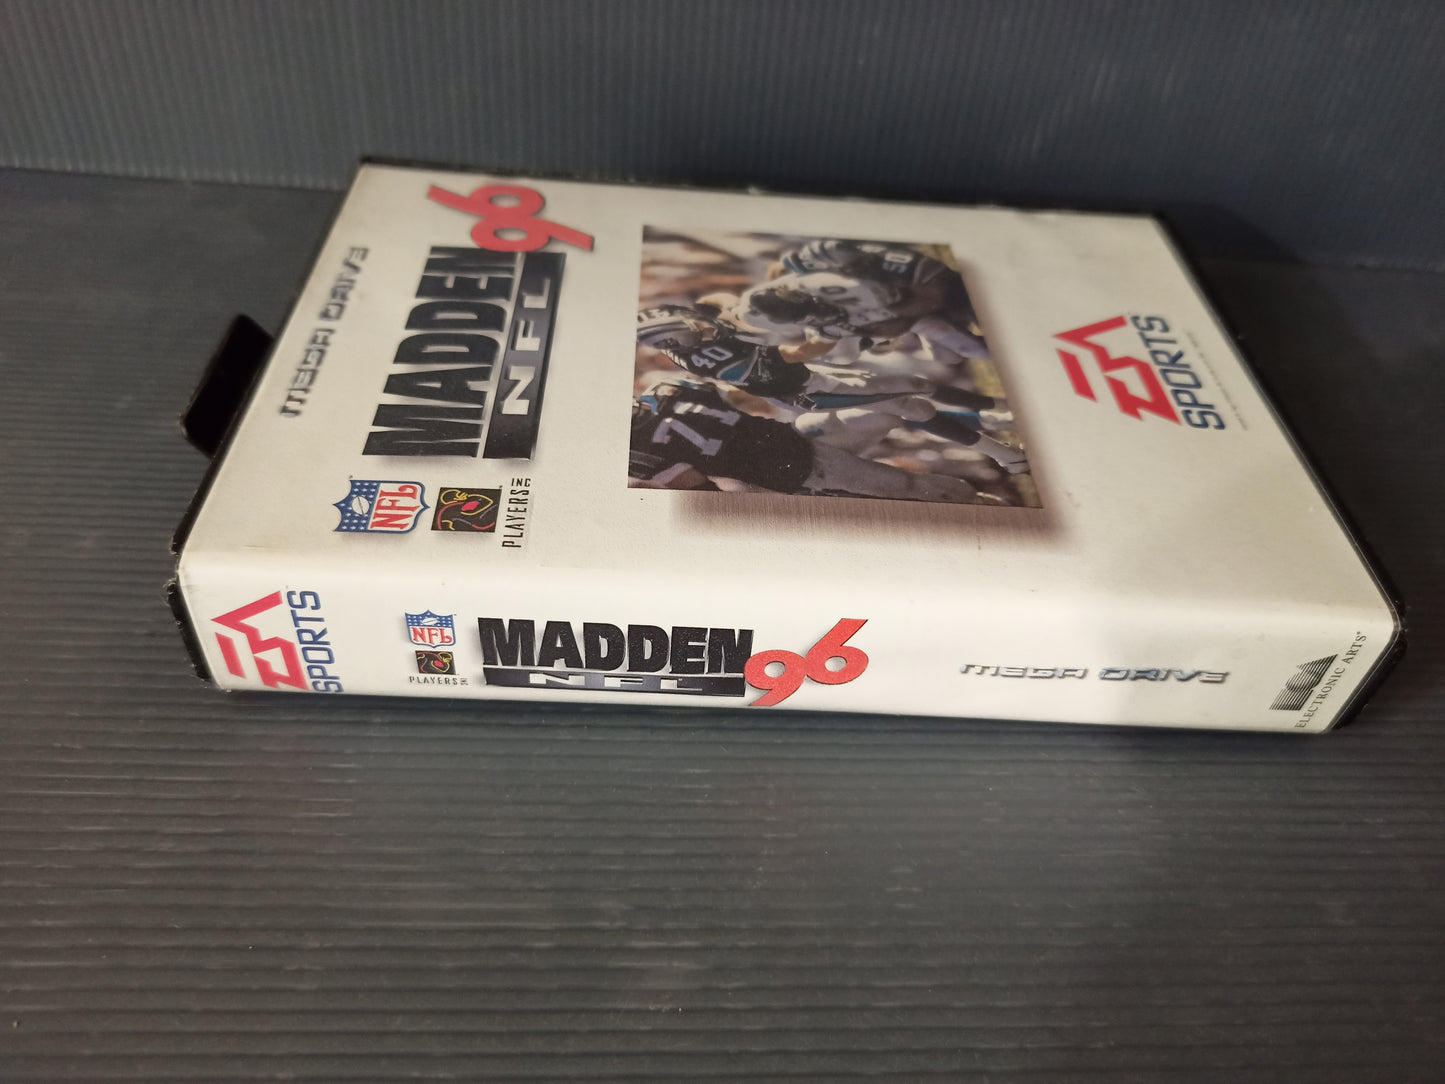 Videogioco Madden NFL 96 Sega Mega Drive, sigillato